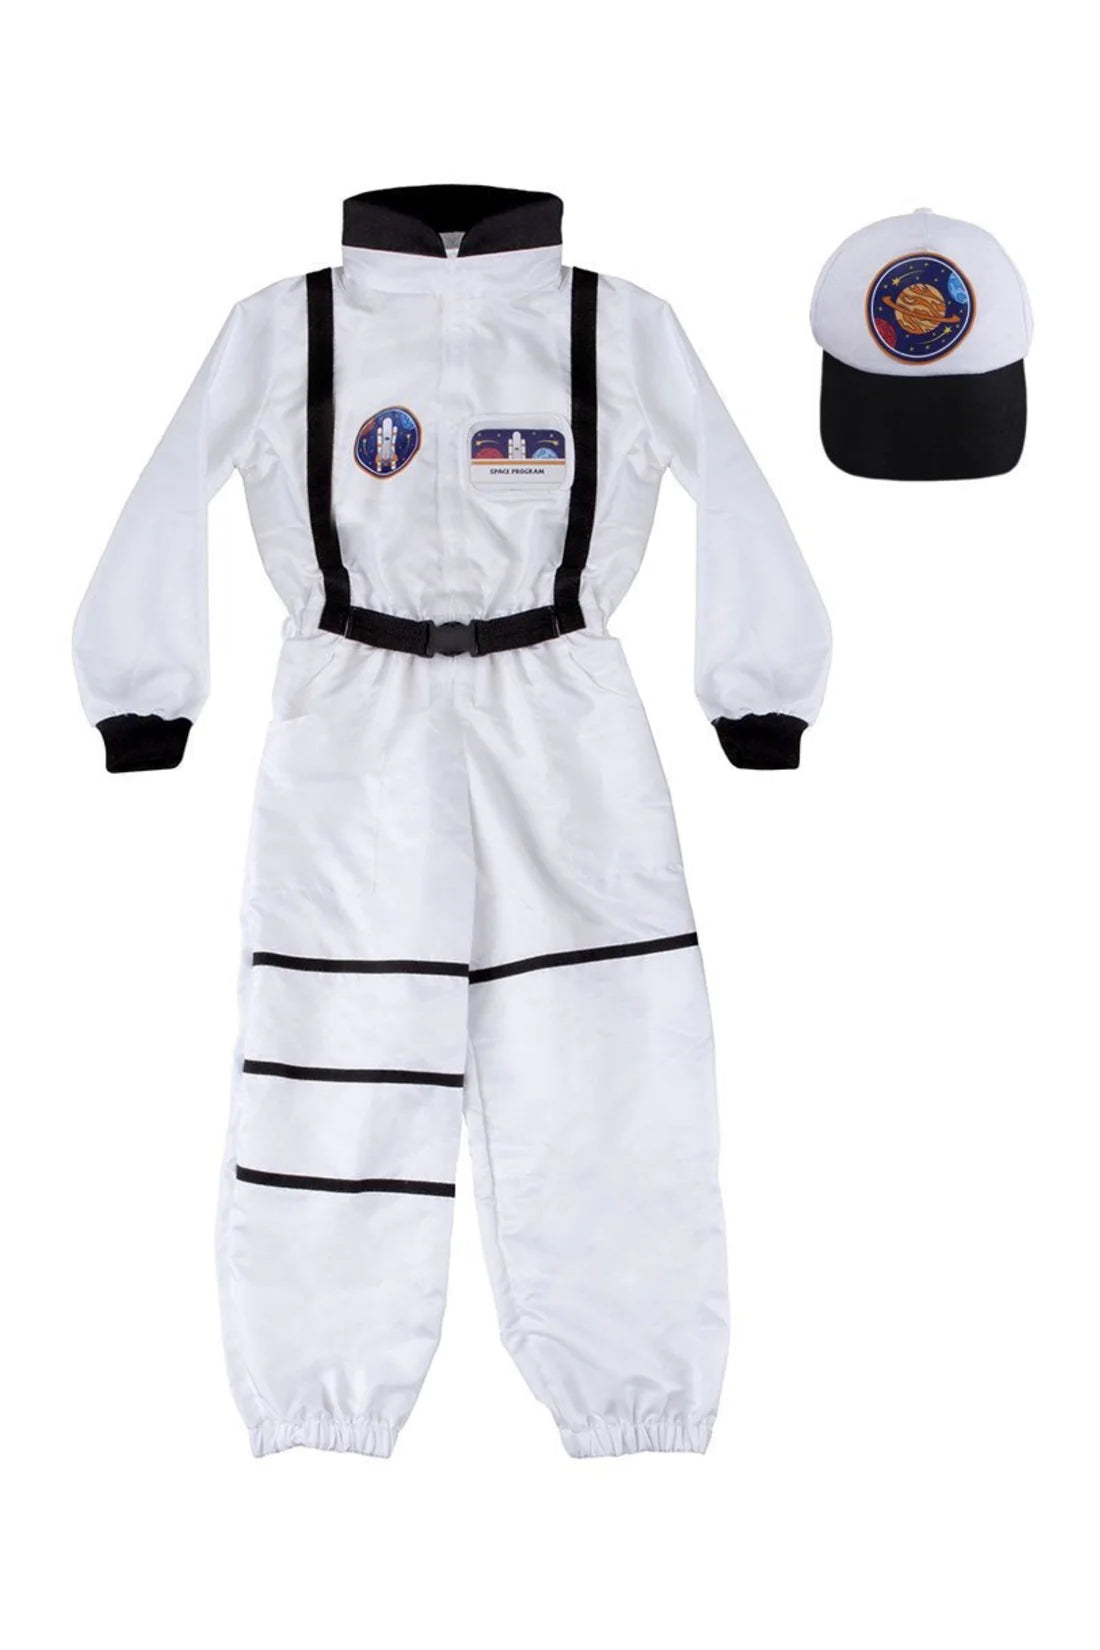 astronaut dress up set